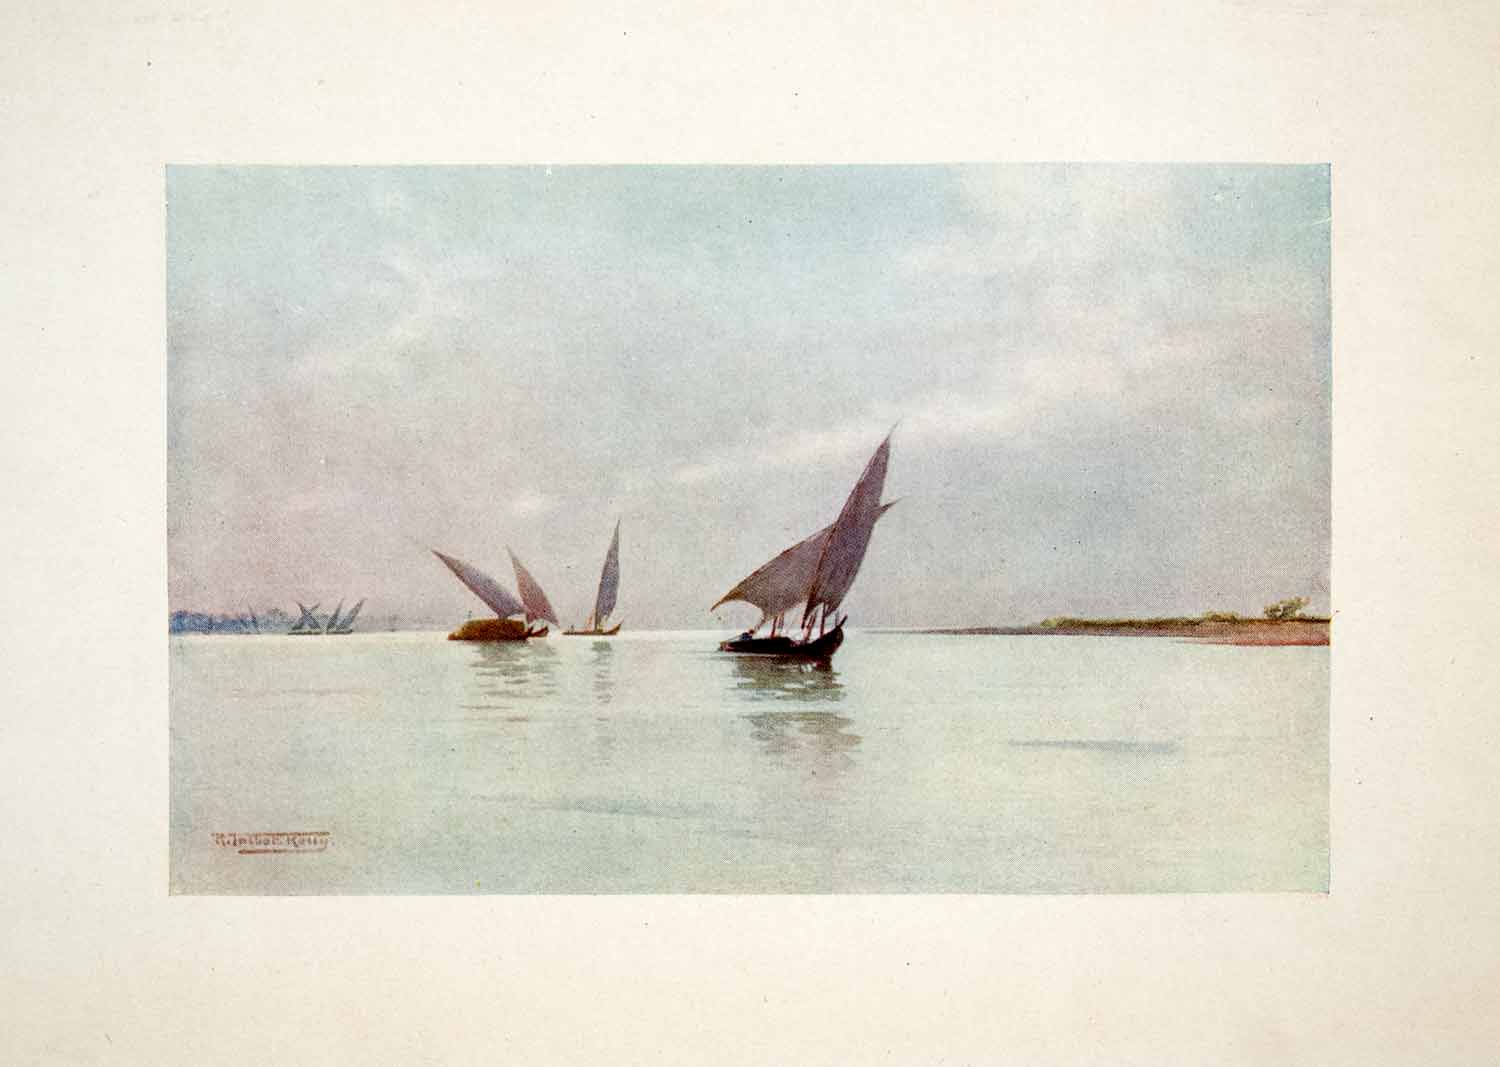 1906 Color Print Silvery Day Upper Nile River Egypt Sailboat Robert Talbot XGOB7